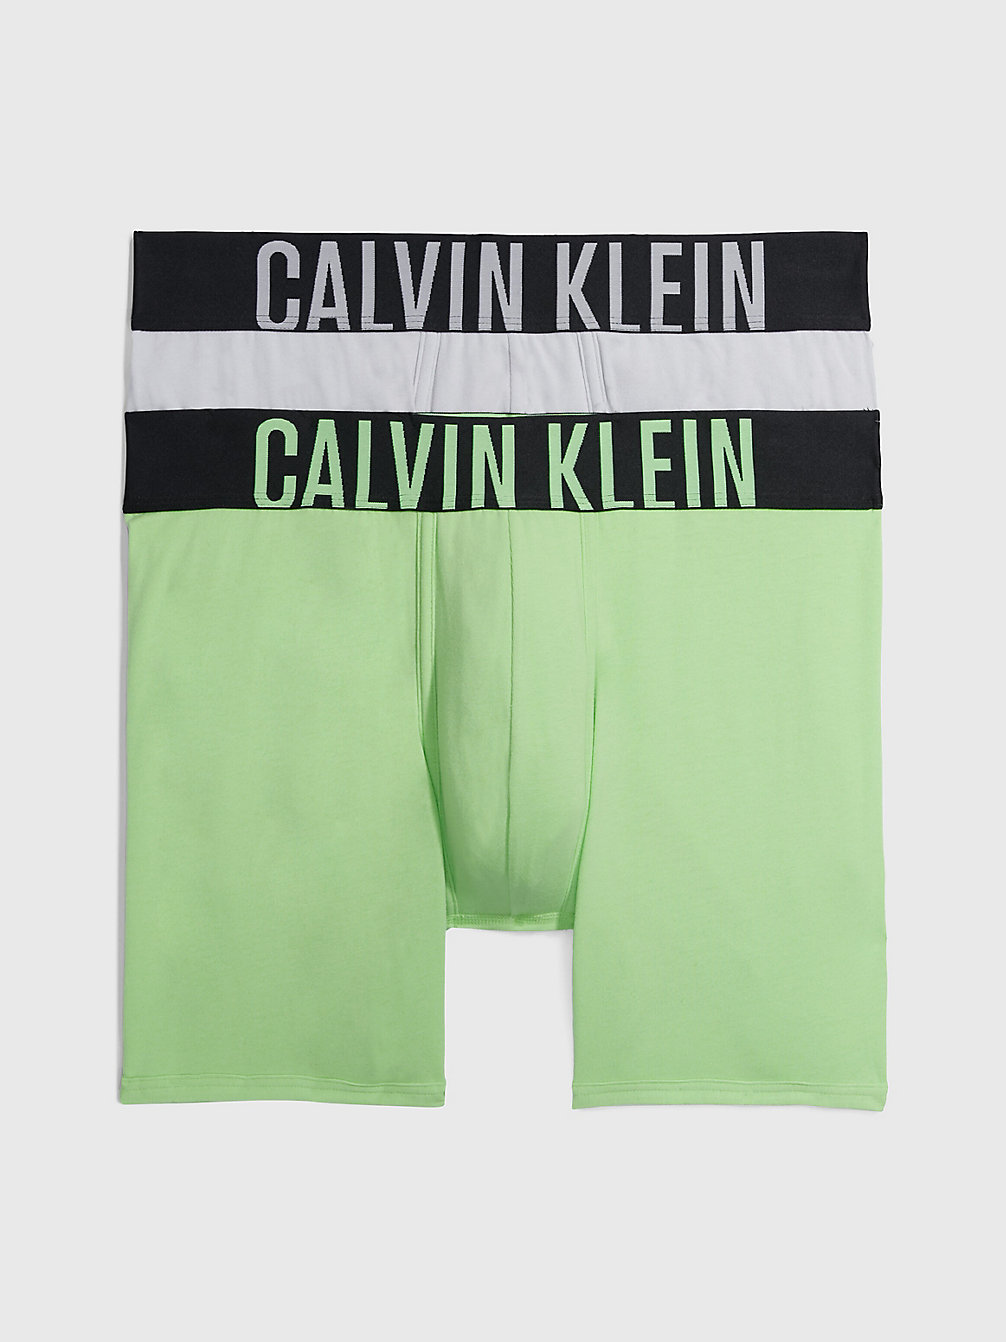 TROPIC LIME, GALAXY GREY 2er-Pack Boxershorts - Intense Power undefined Herren Calvin Klein